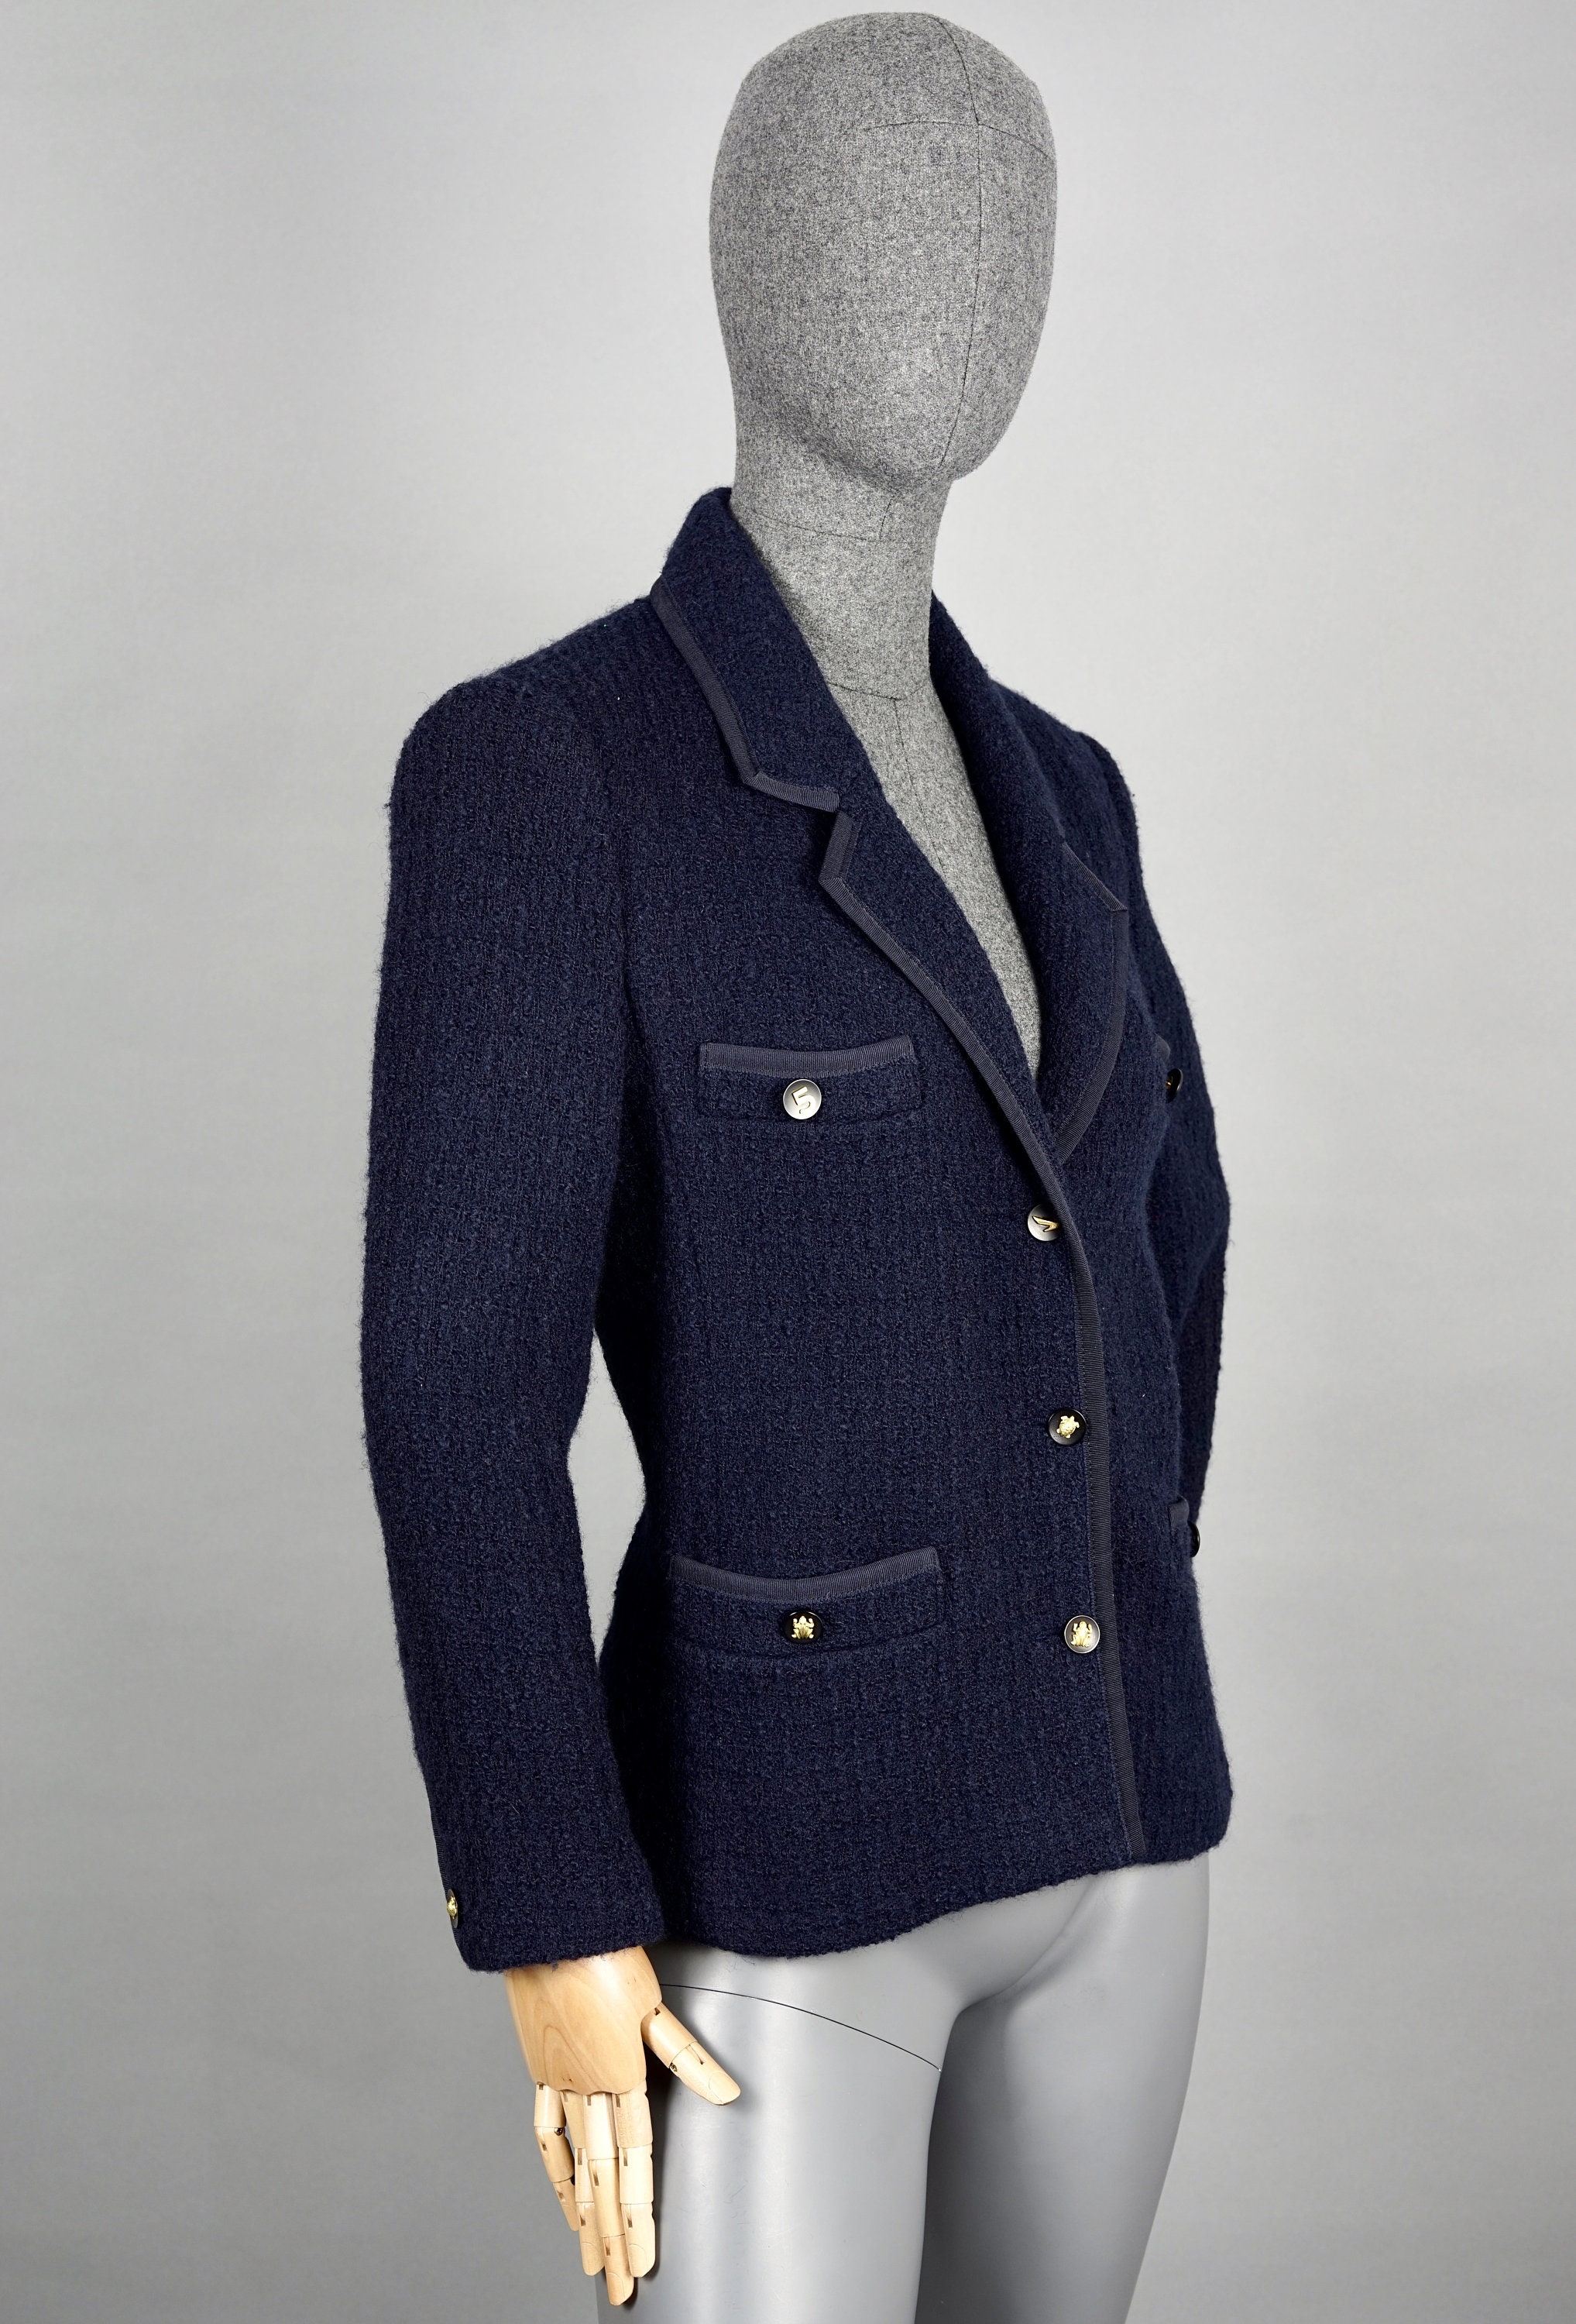 Chanel blue tweed jacket - Gem